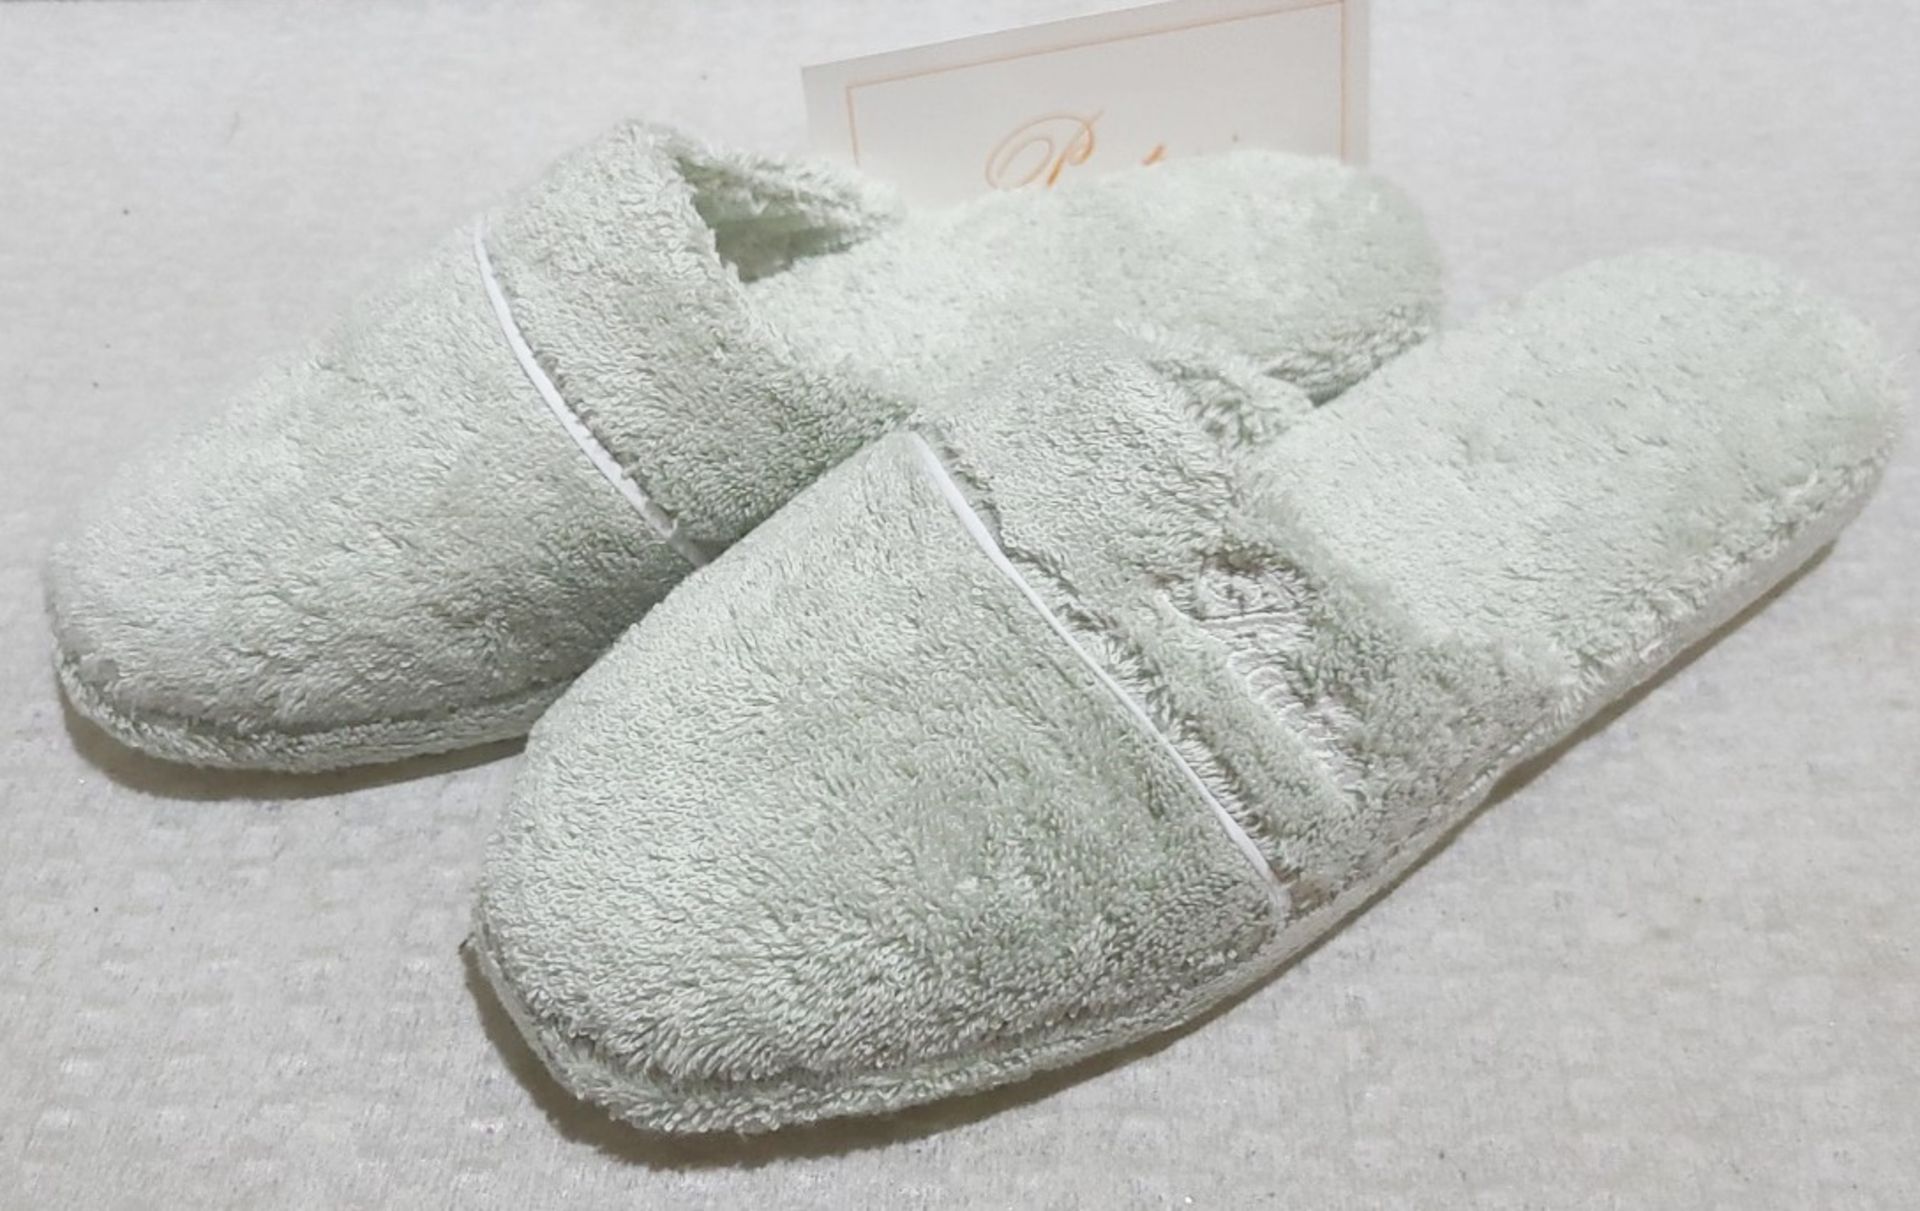 1 x PRATESI Panofole Lunar Grey Terry Cotton Slippers Size 40/41 - Original Price £200.00 - Image 2 of 6